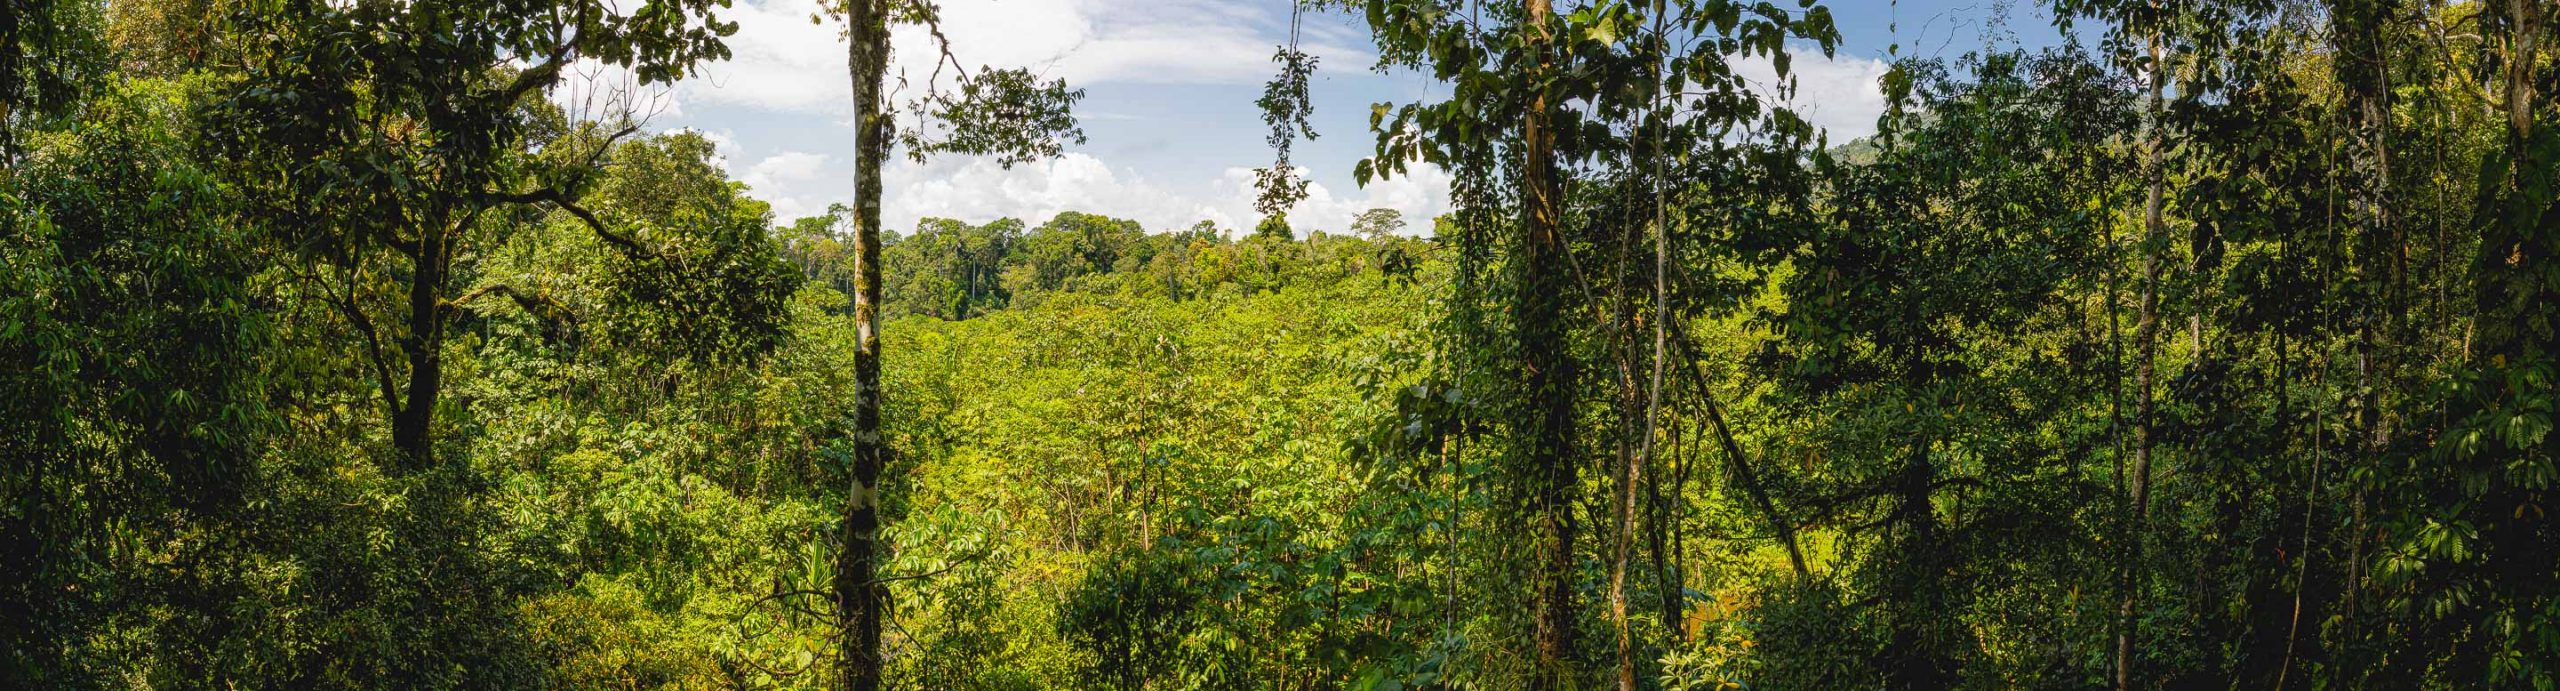 MIRADOR ATALAYA (WATCHTOWER LOOKOUT) – THE AMAZON BASIN